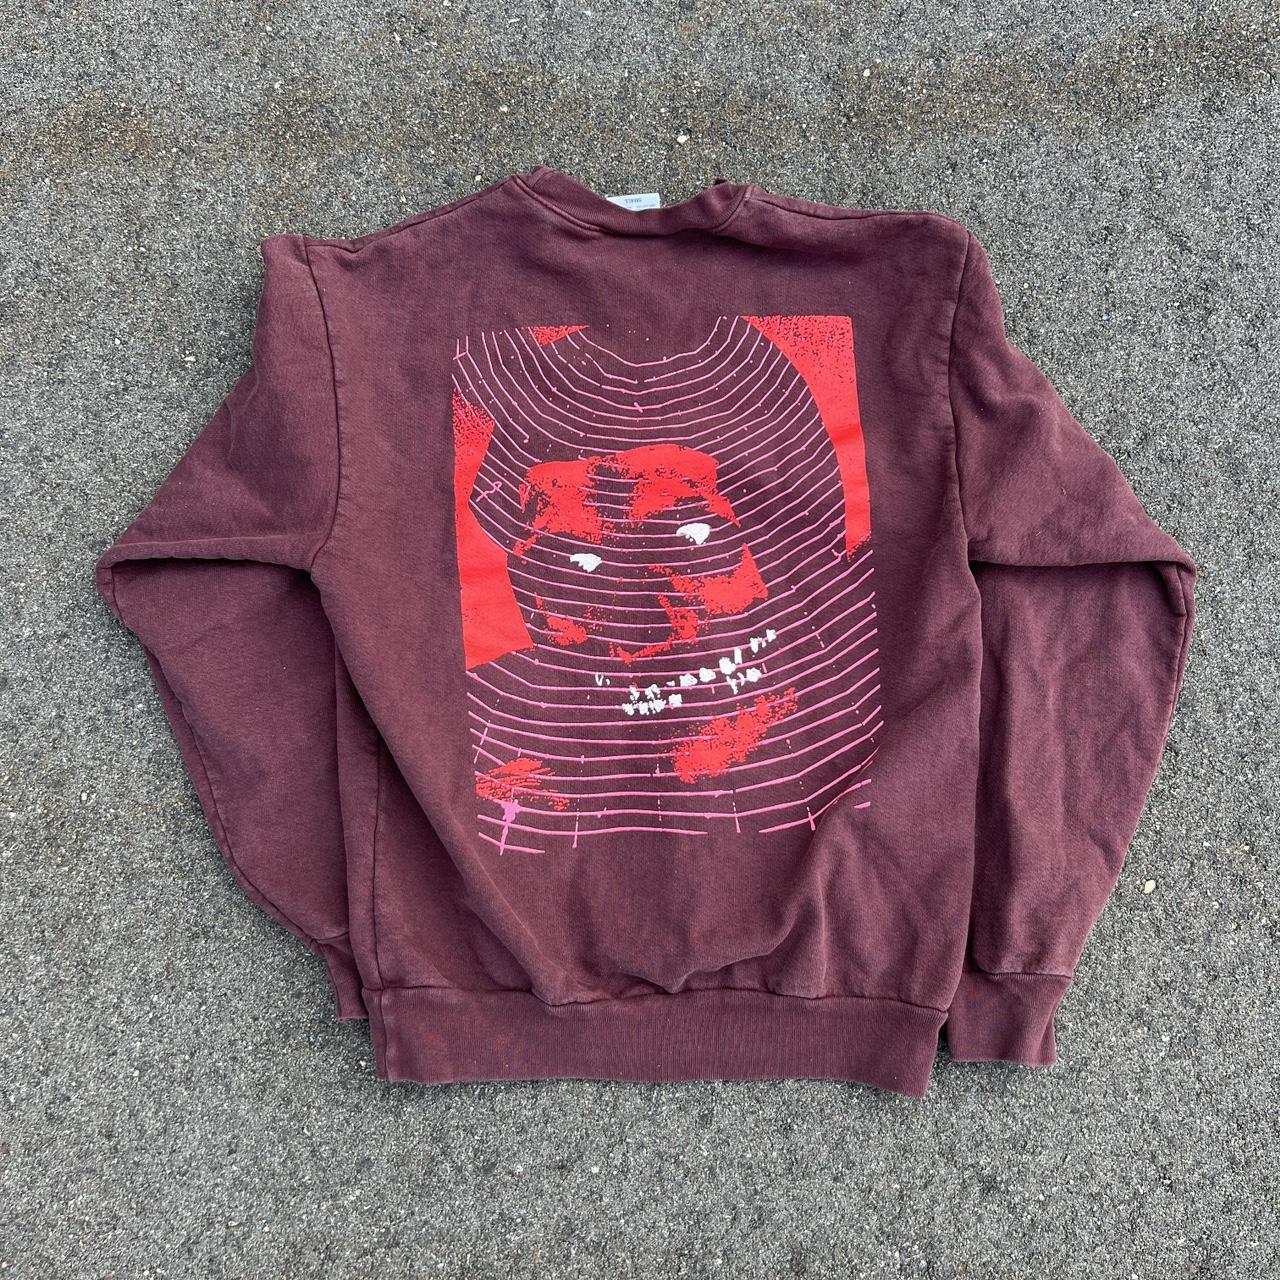 Stray Rats Men's Burgundy and Red Sweatshirt | Depop